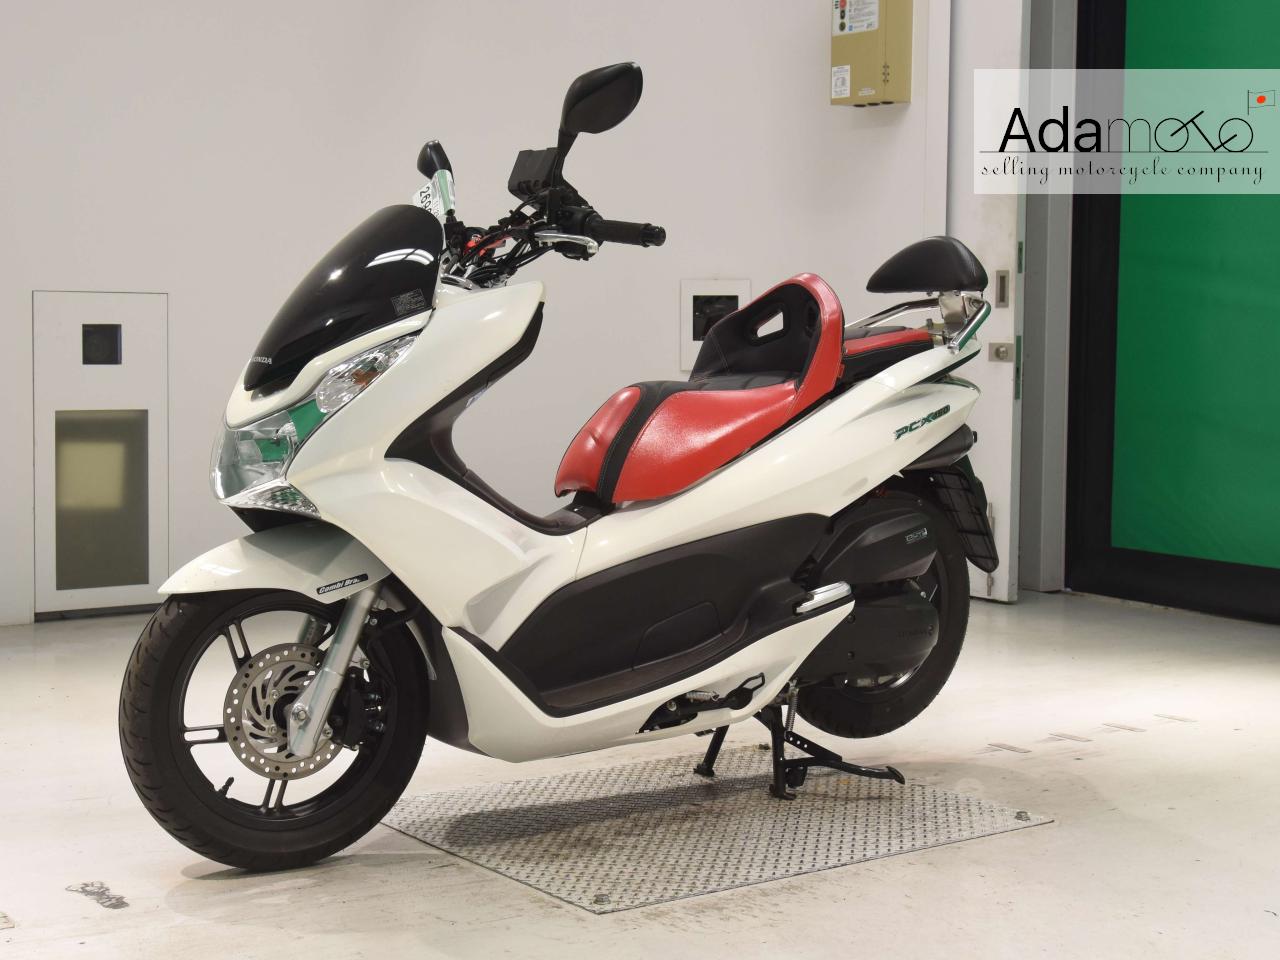 Honda PCX150 - Adamoto - Motorcycles from Japan